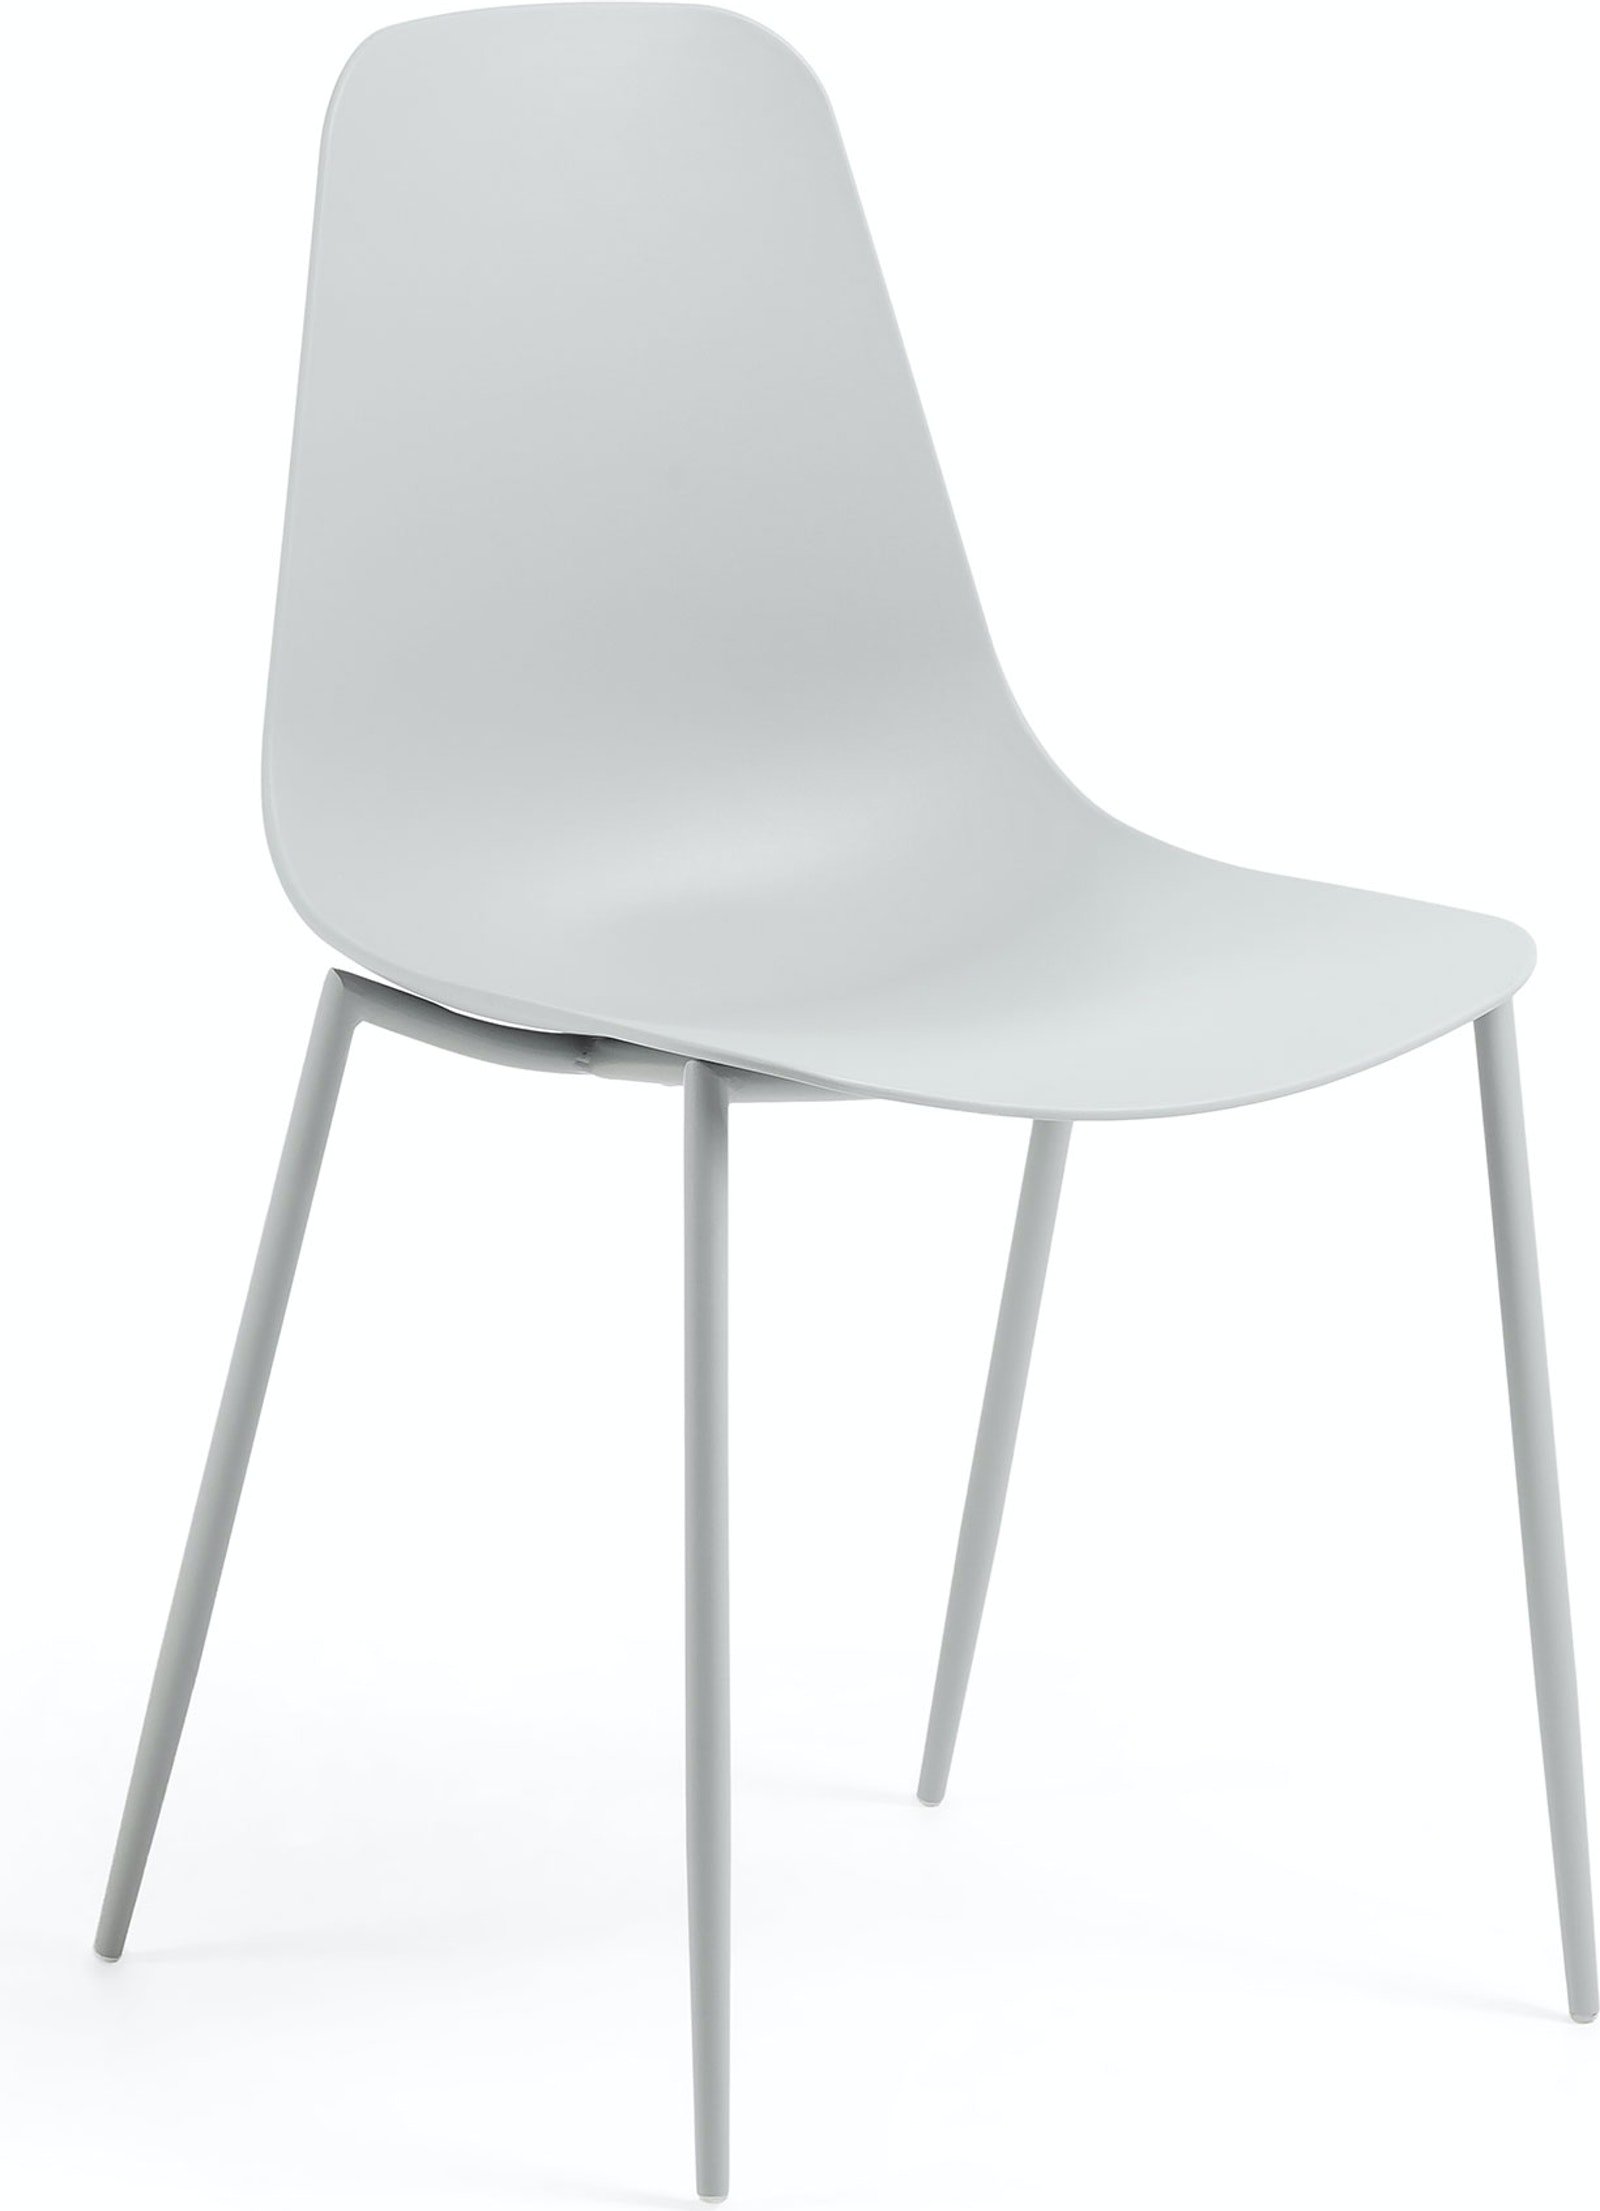 Whatts, Spisebordsstol, moderne, nordisk, plast by LaForma (H: 87 cm. B: 49 cm. L: 53 cm., Grå)